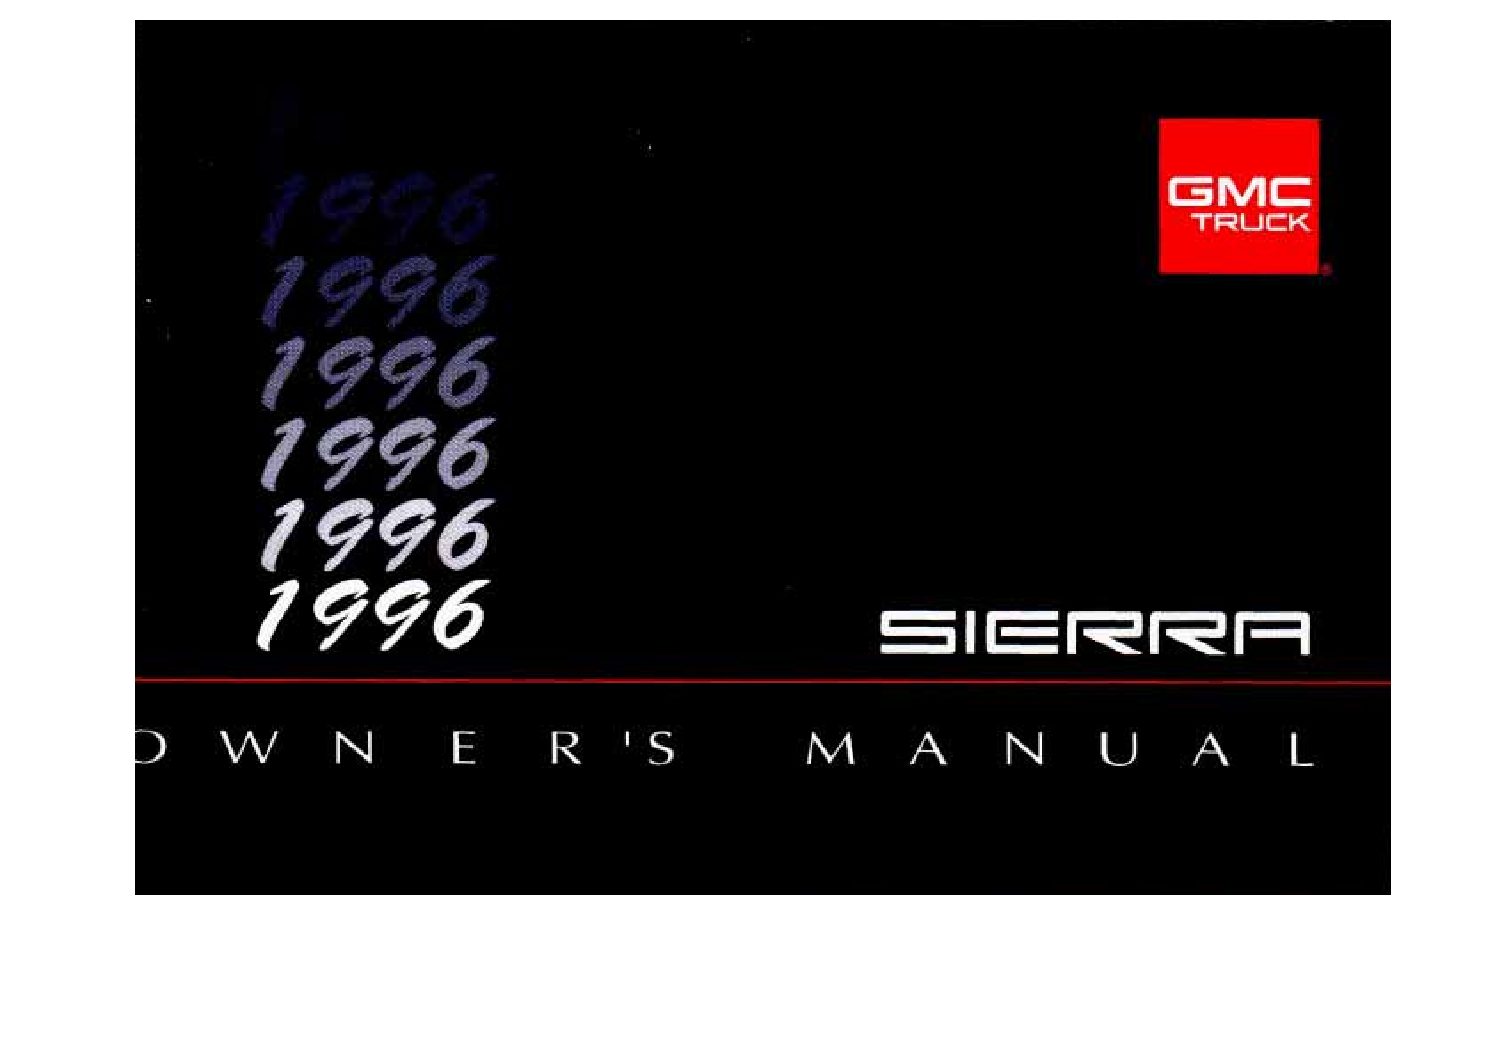 1996 GMC Sierra Image